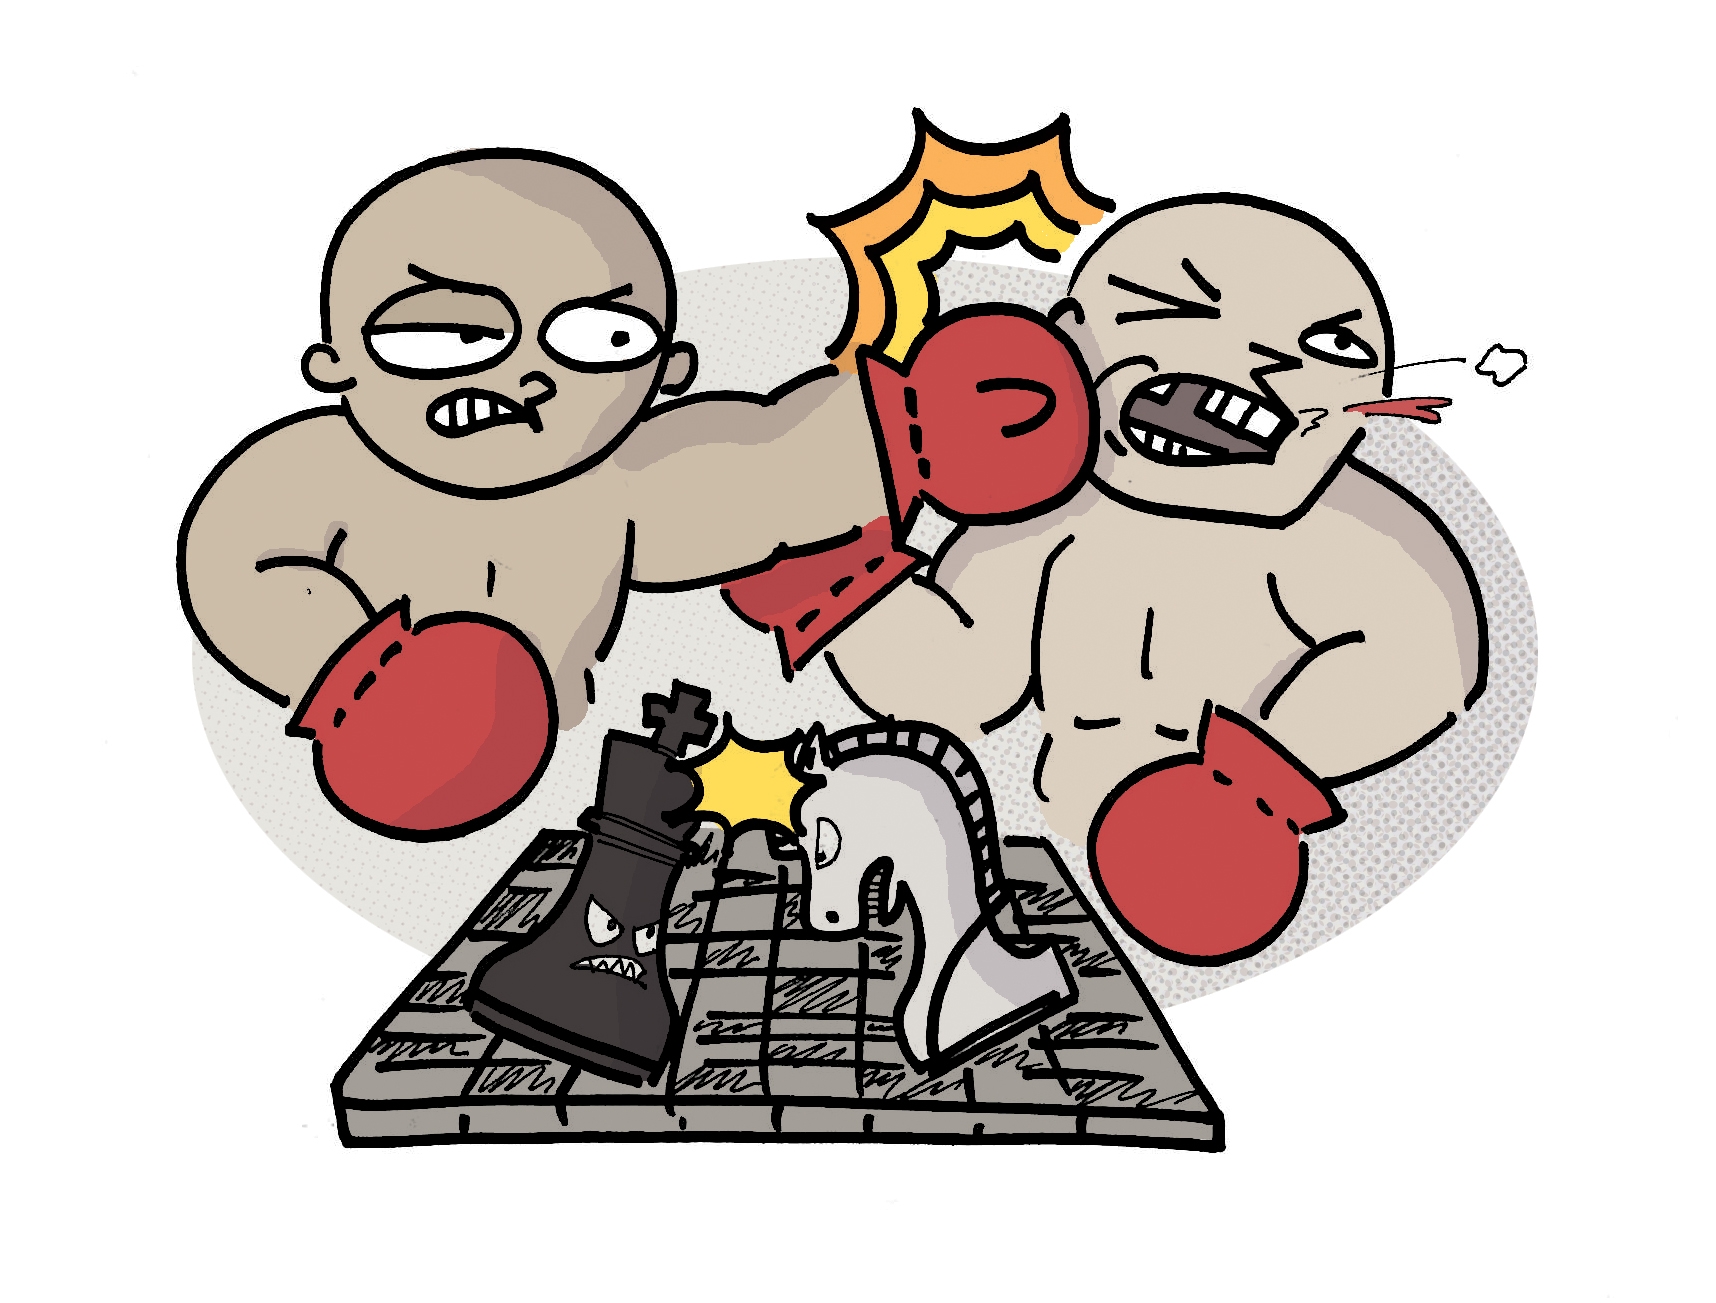 Brain vs. Brawn - chessboxing - MMA Underground